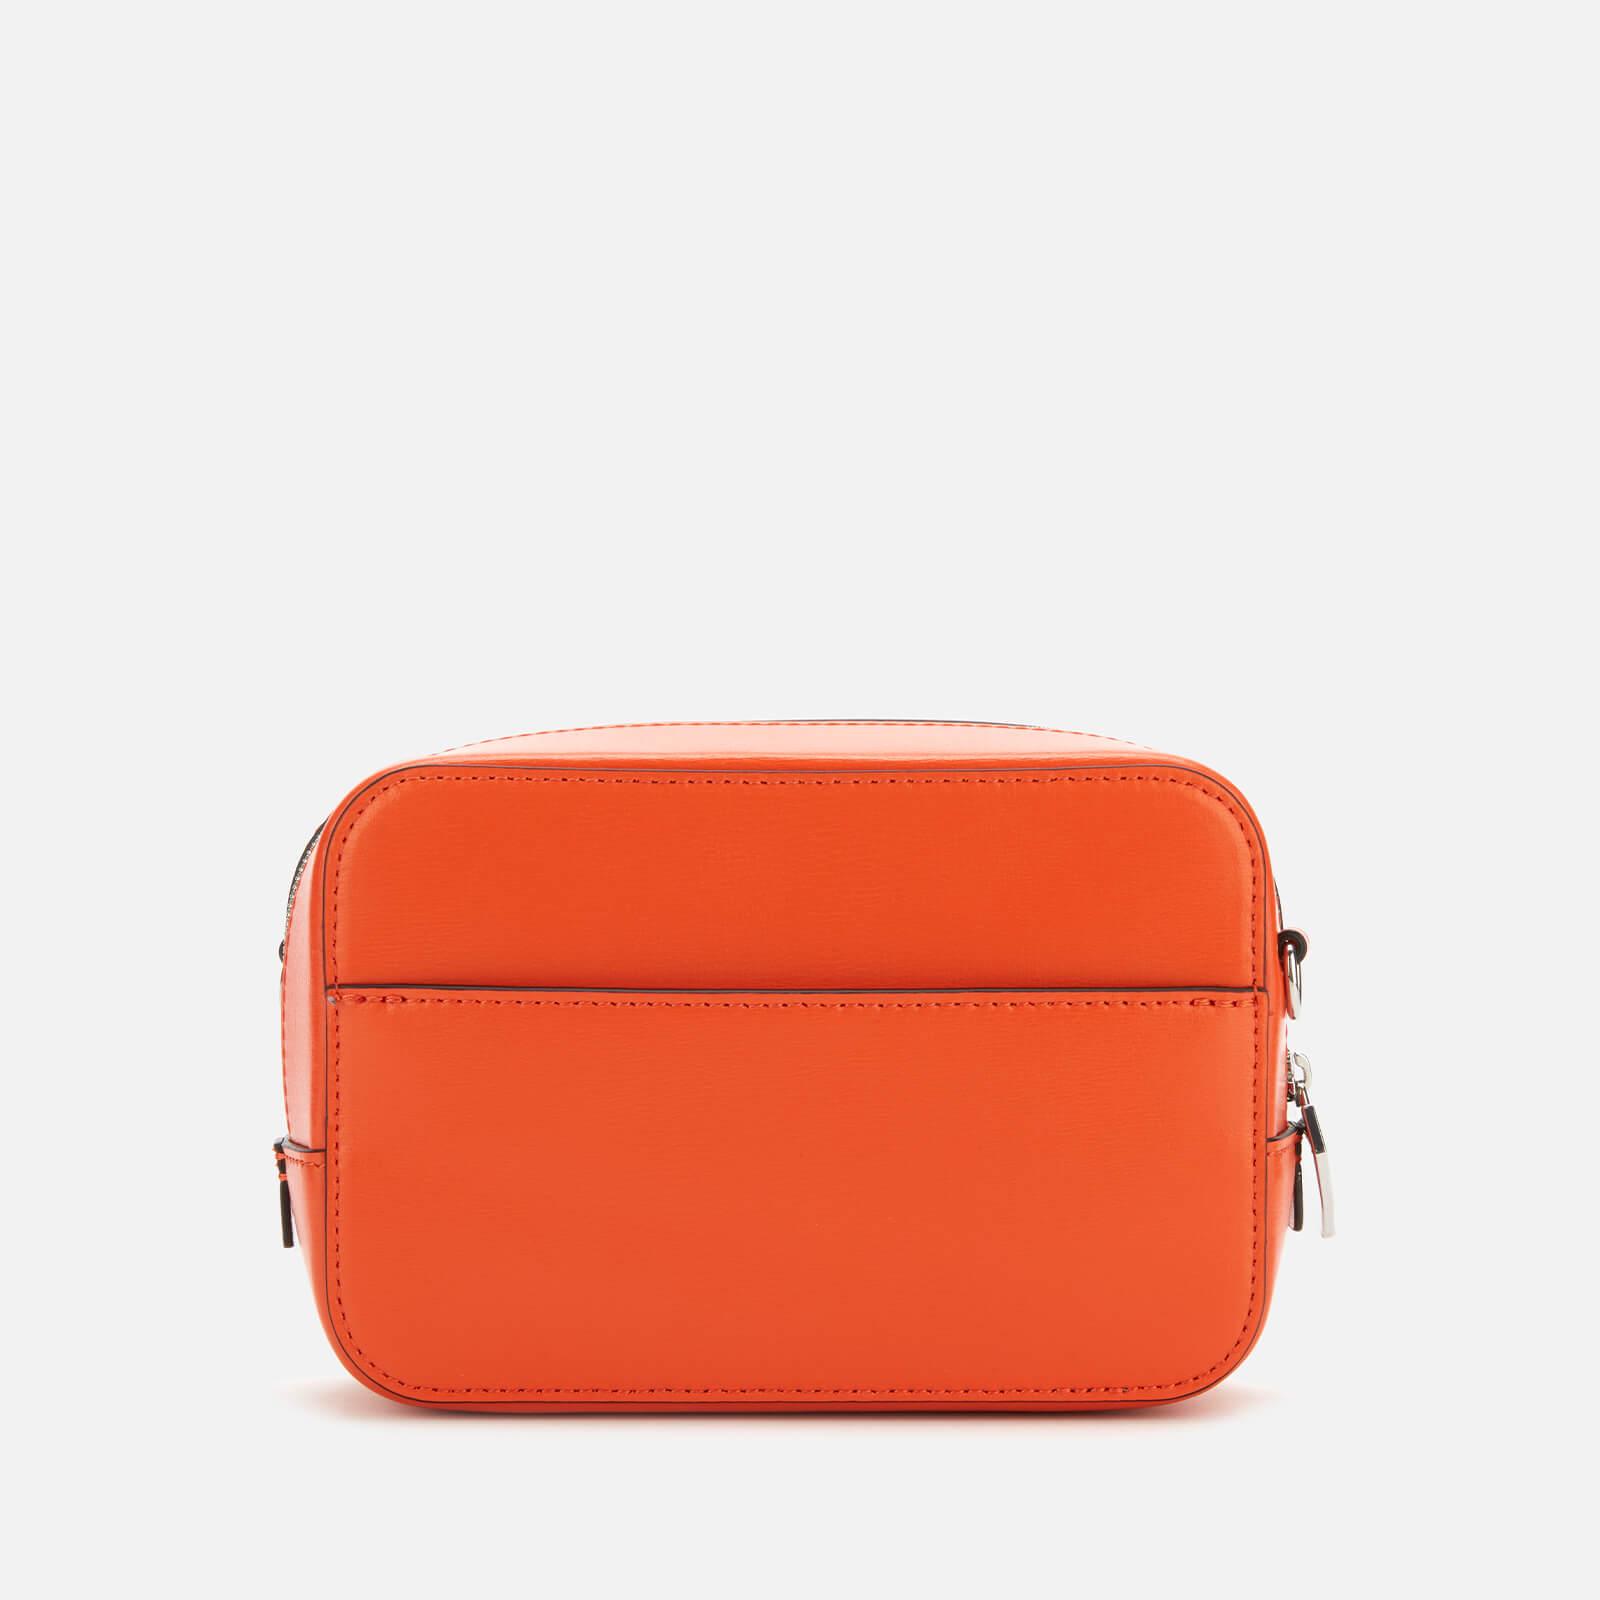 Ganni Textured Leather Bag in Orange - Lyst